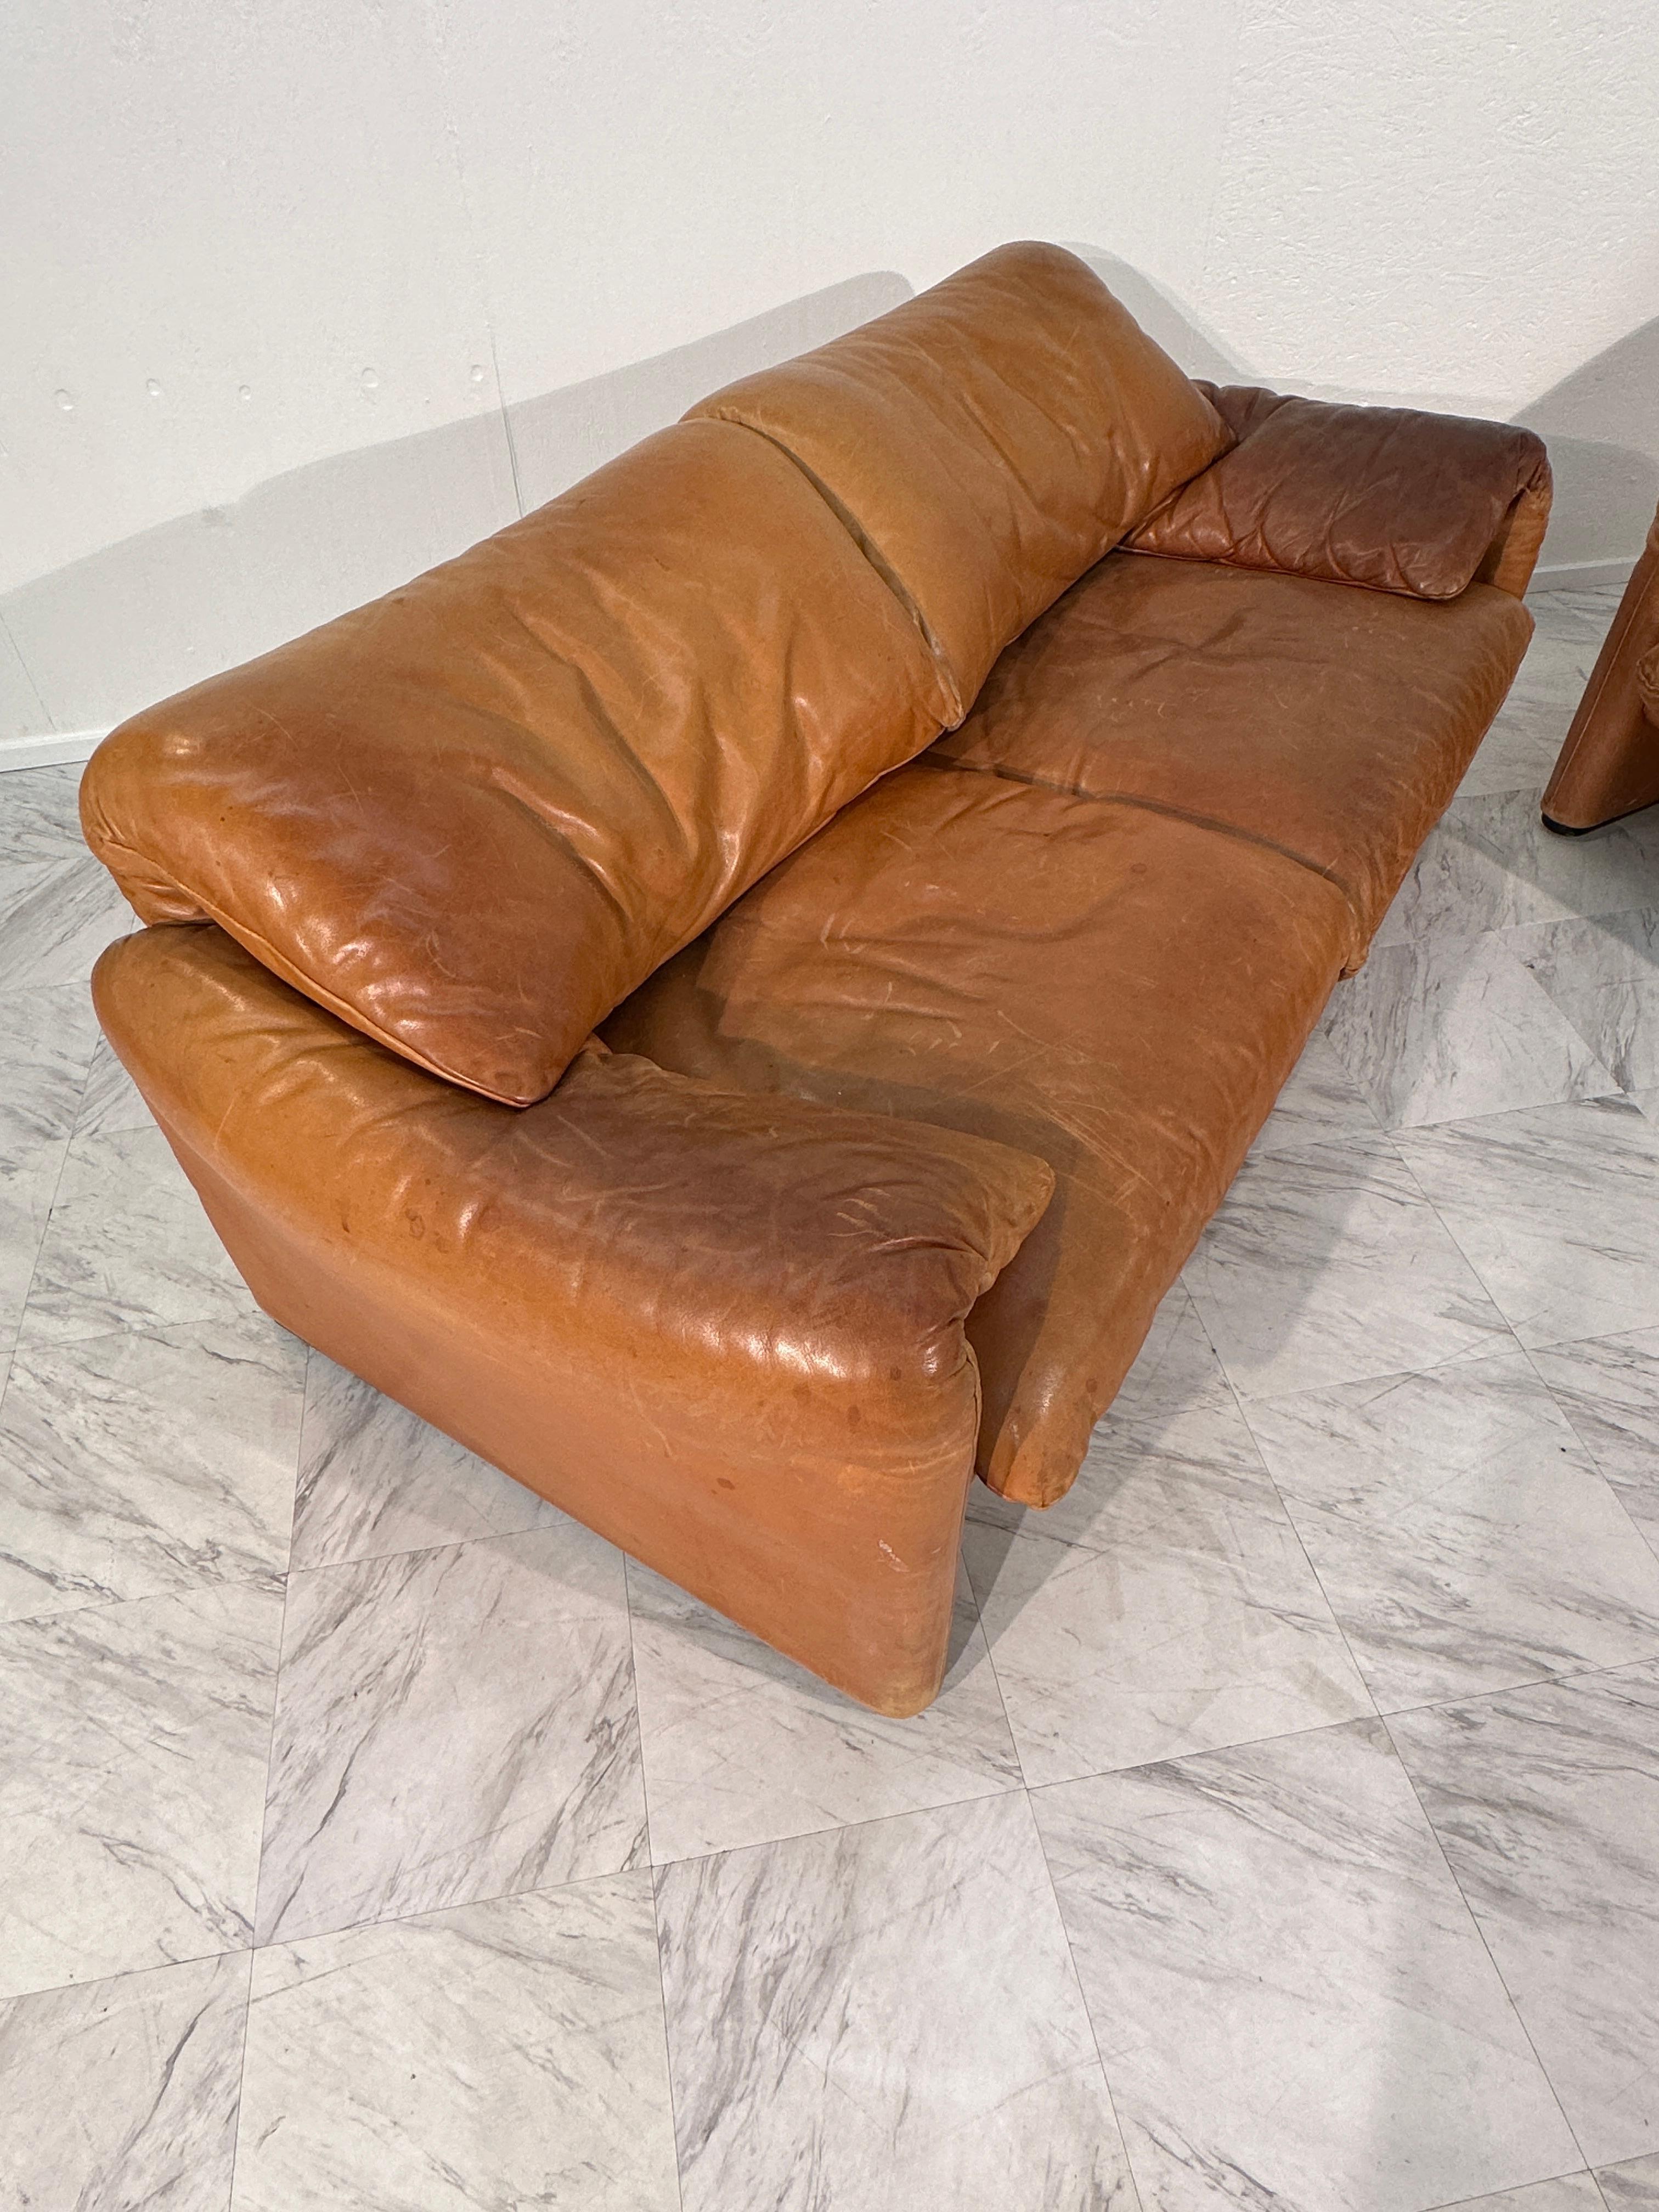 Vico Magistretti Maralunga Leather Sofa by Cassina 1975 In Good Condition For Sale In Los Angeles, CA